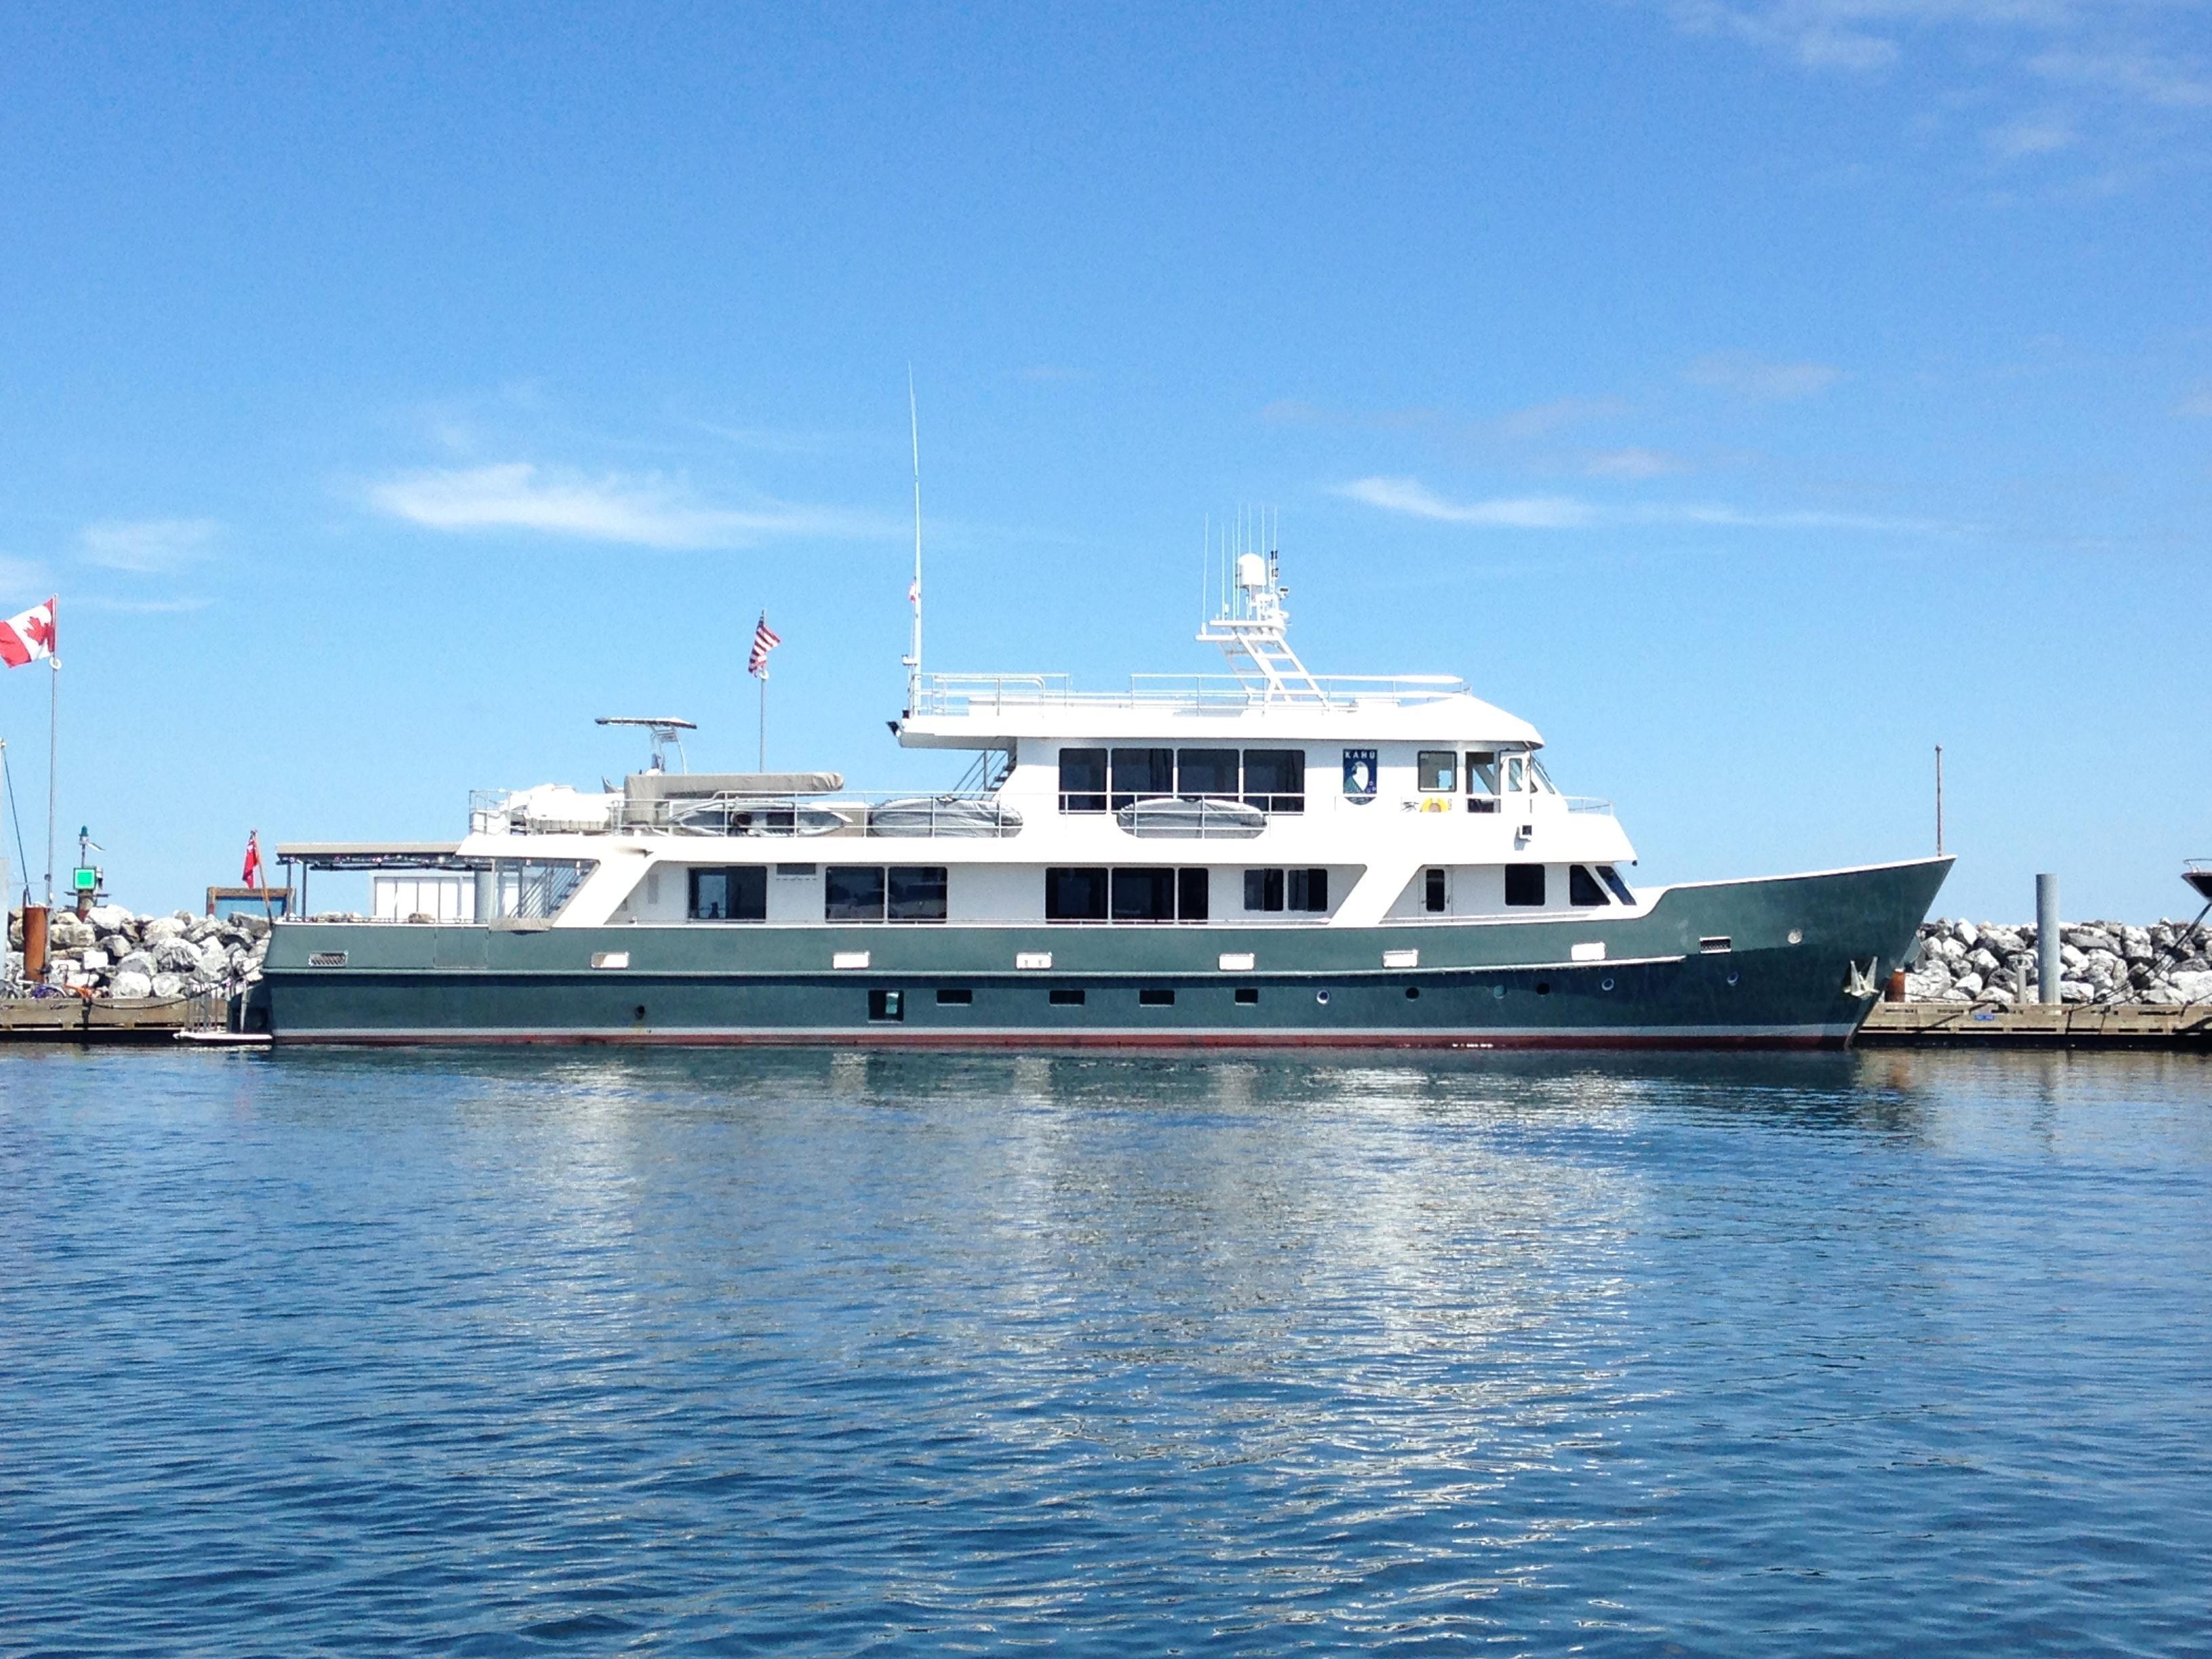 Whangarei/Fitzroy Expedition Vessel, Cruising Northwest